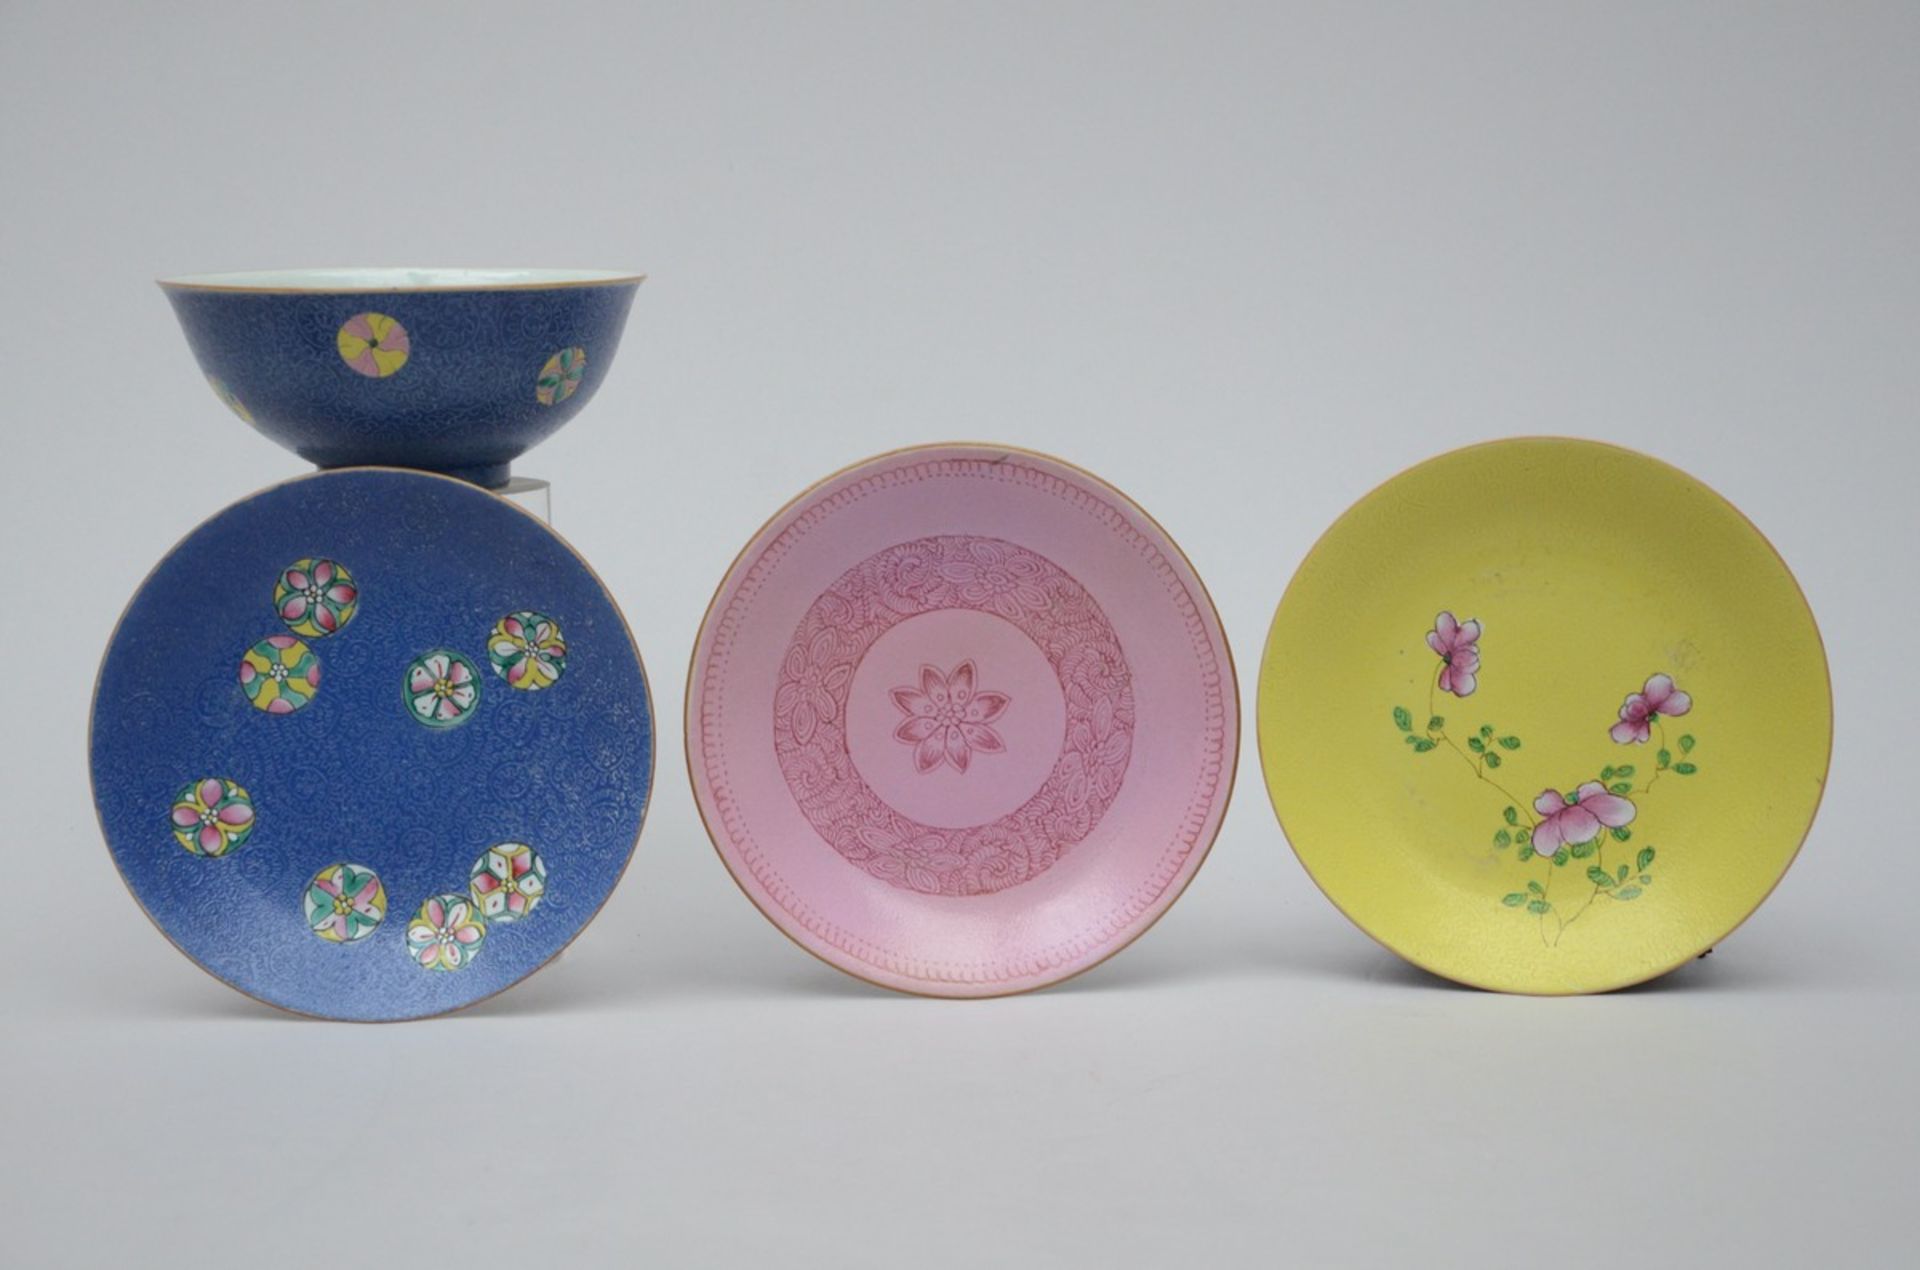 A collection of Republic porcelain with graviata decoration: 4 bowls (dia 17.5 - 20 cm)